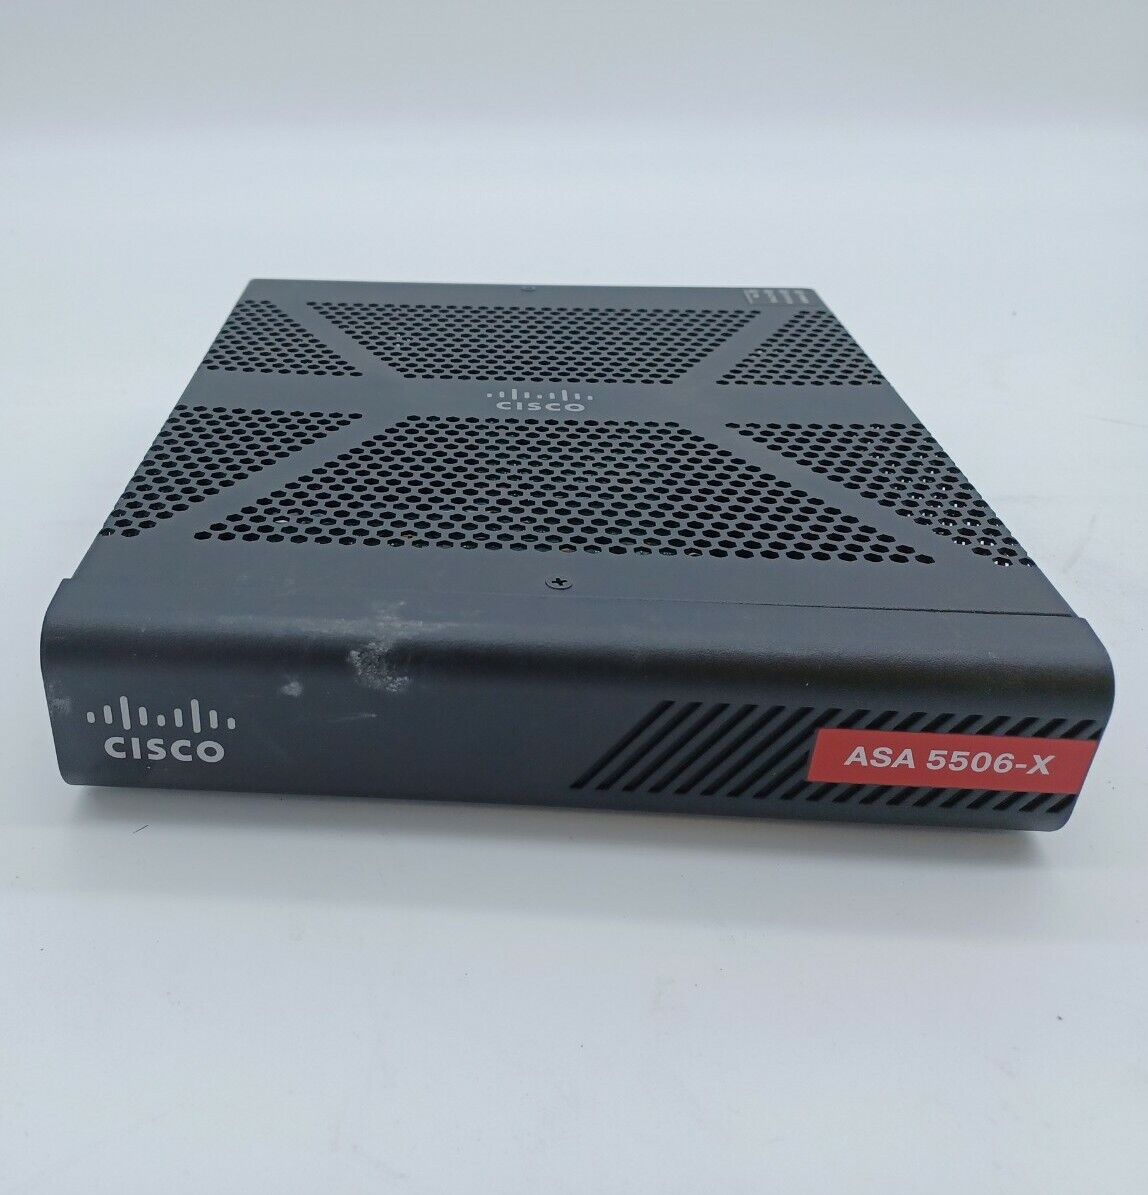 Cisco ASA 5506-X Network Security Firewall